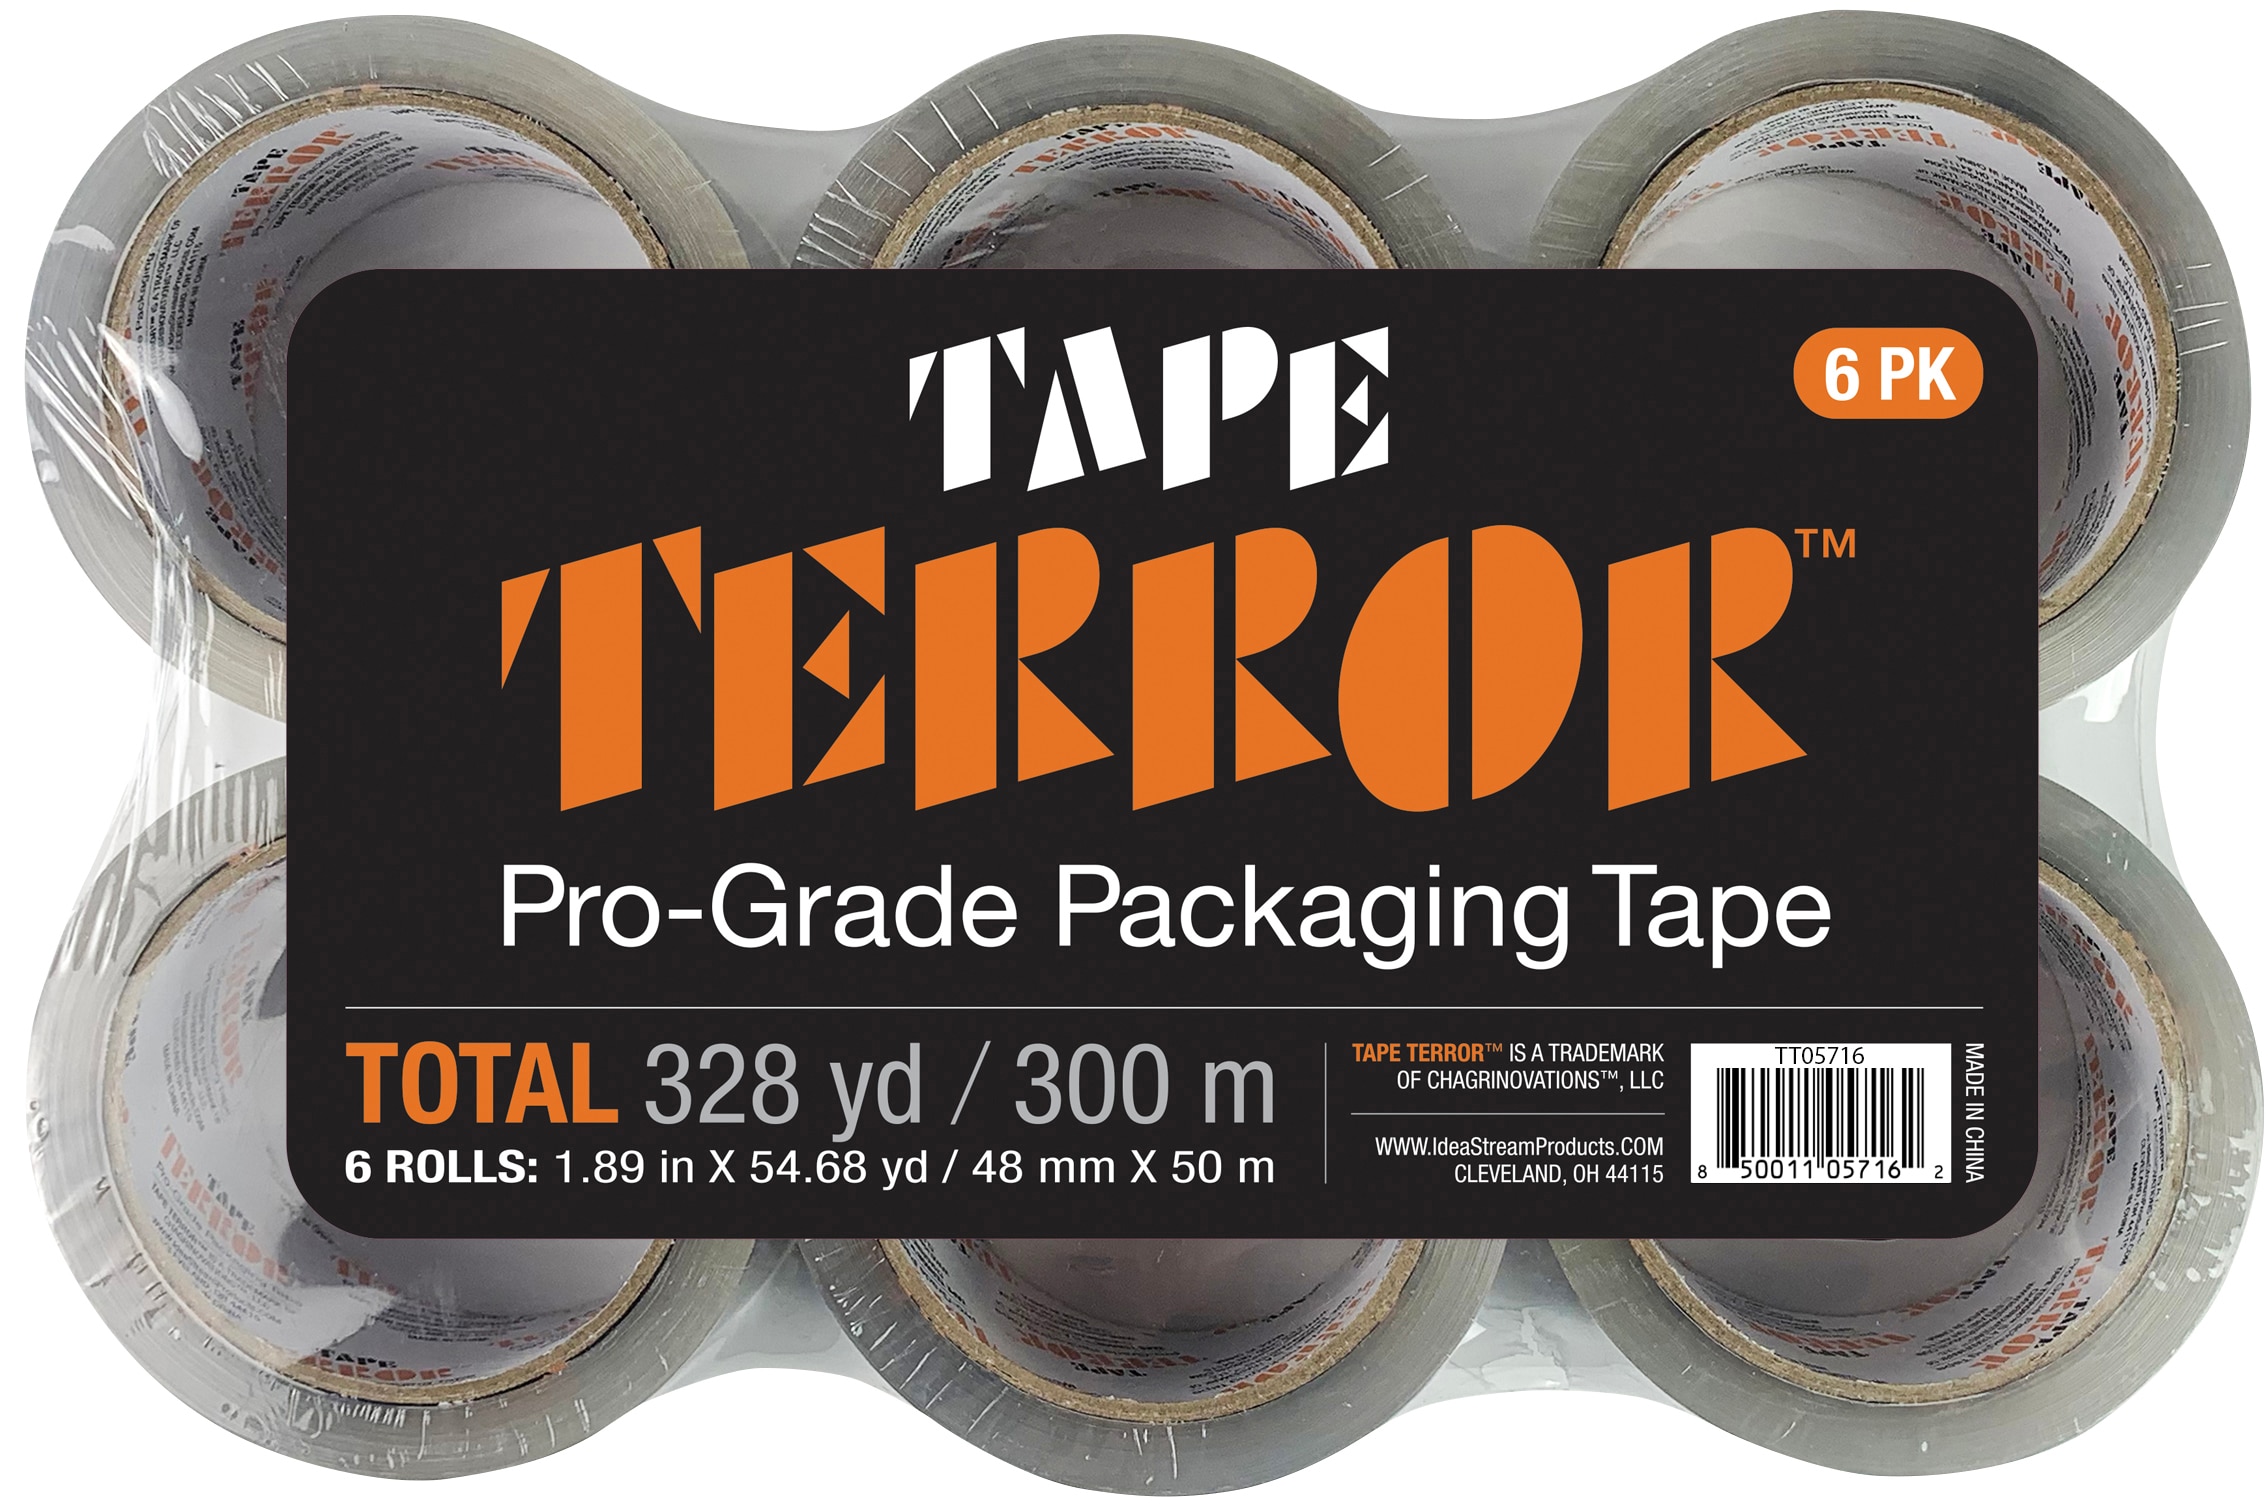 Tape Terror